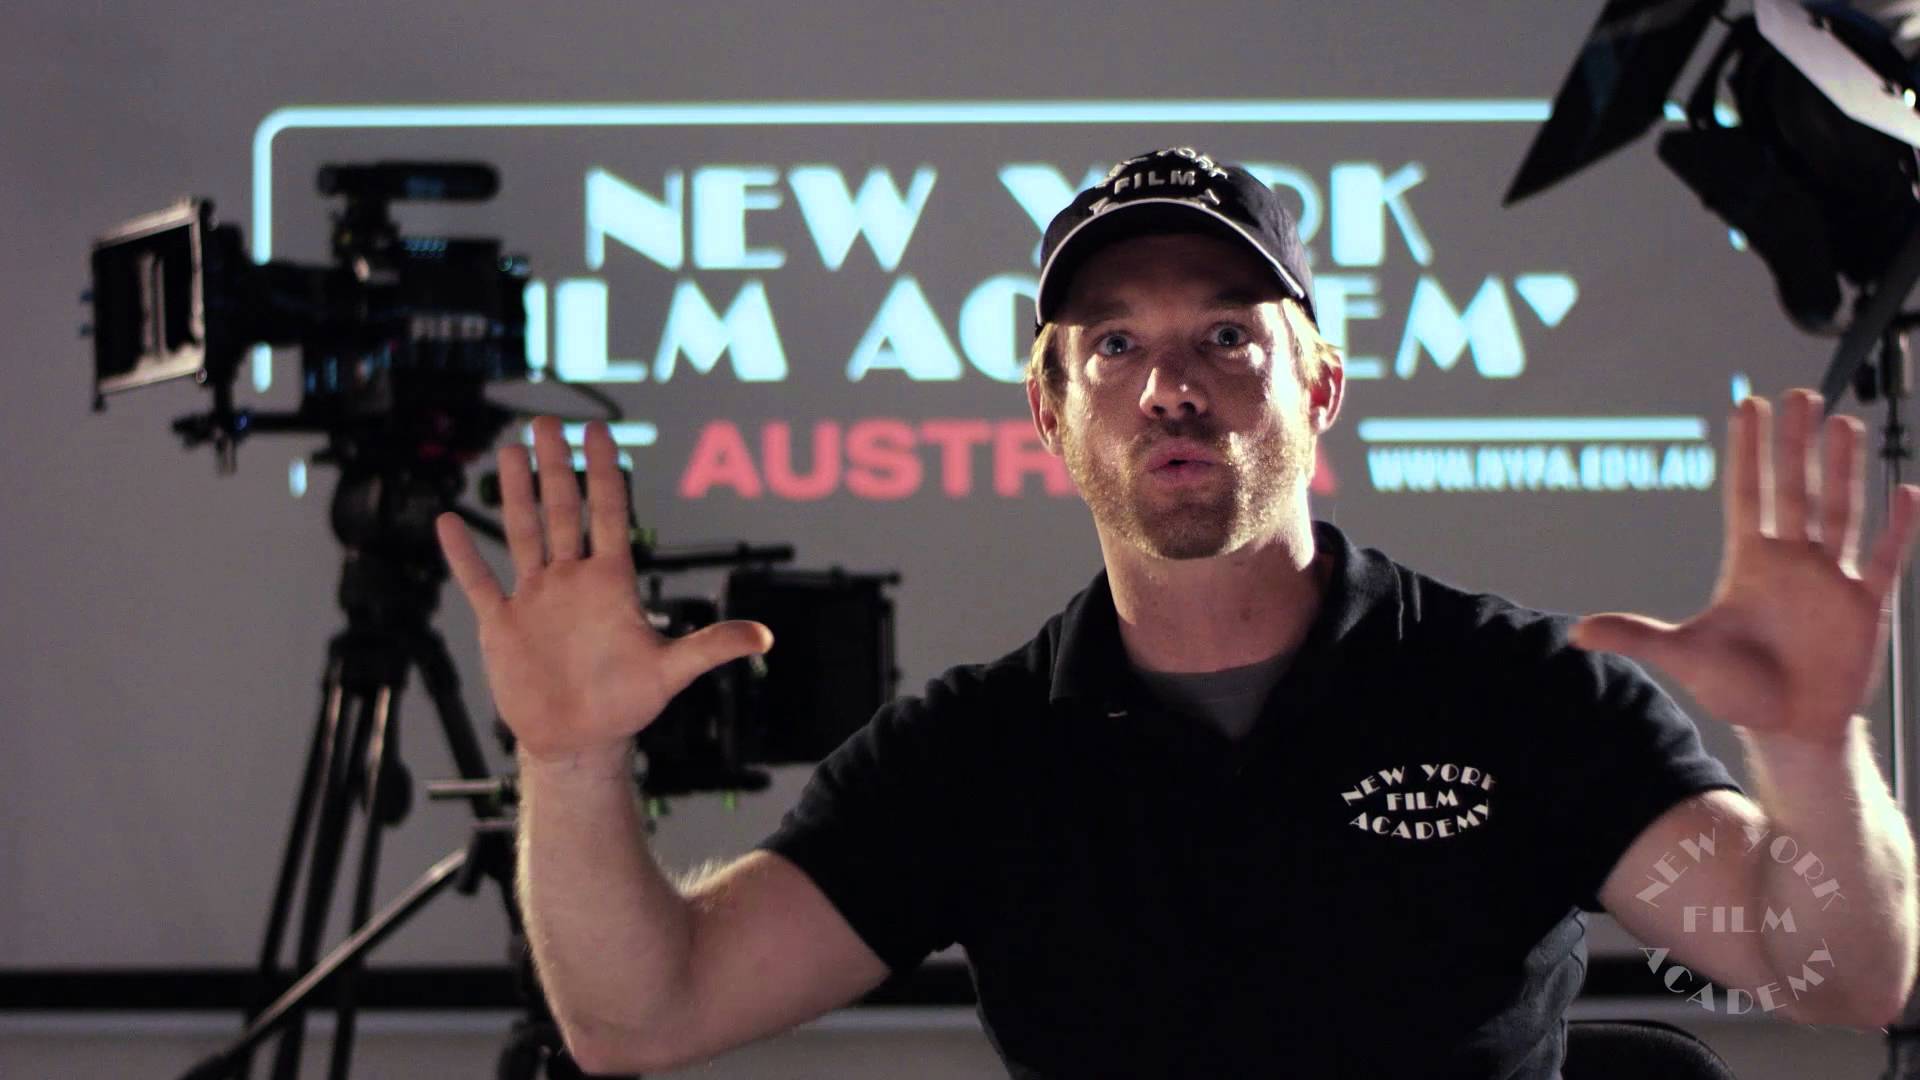 New York Film Academy Australia Teen Camp